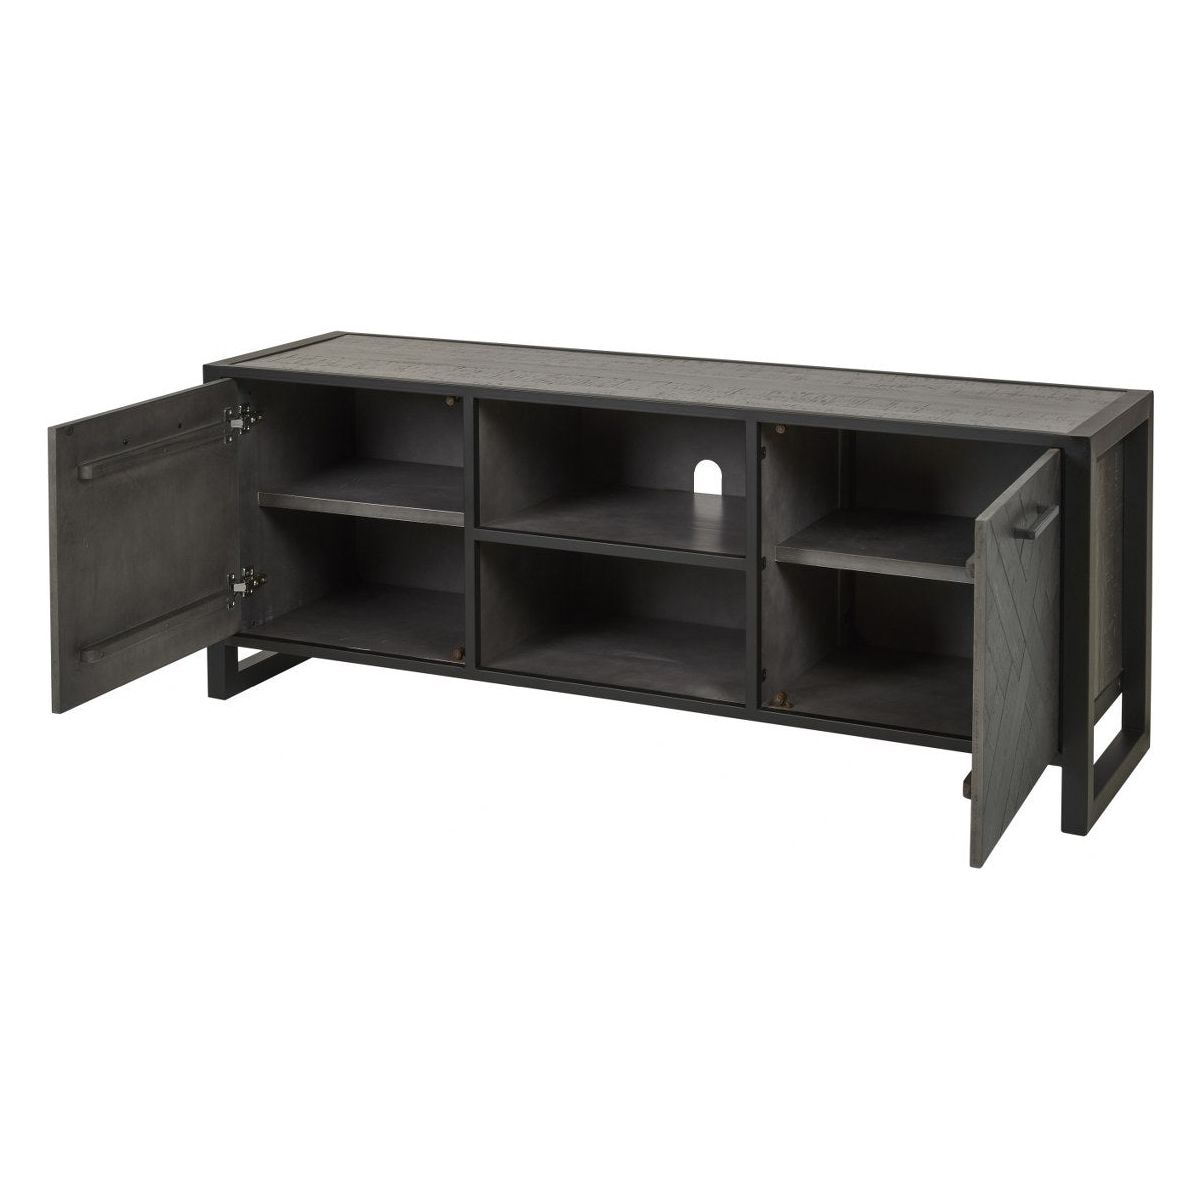 TV cabinet | Furniture series Micras | Dark gray, black | 160x